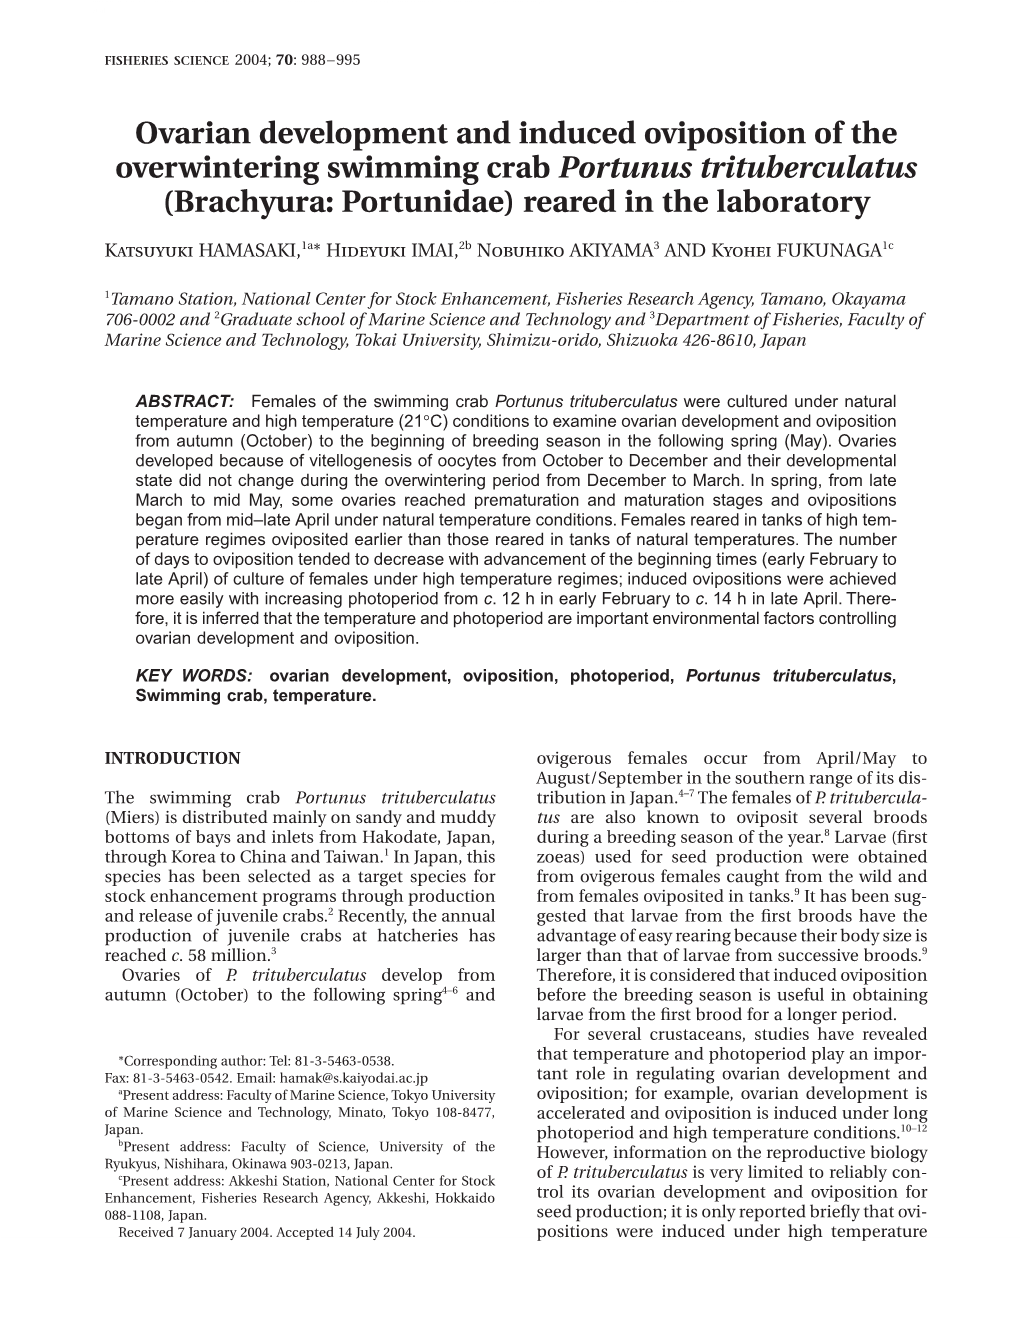 Ovarian Development and Induced Oviposition of the Overwintering Swimming Crab Portunus Trituberculatus (Brachyura: Portunidae) Reared in the Laboratory